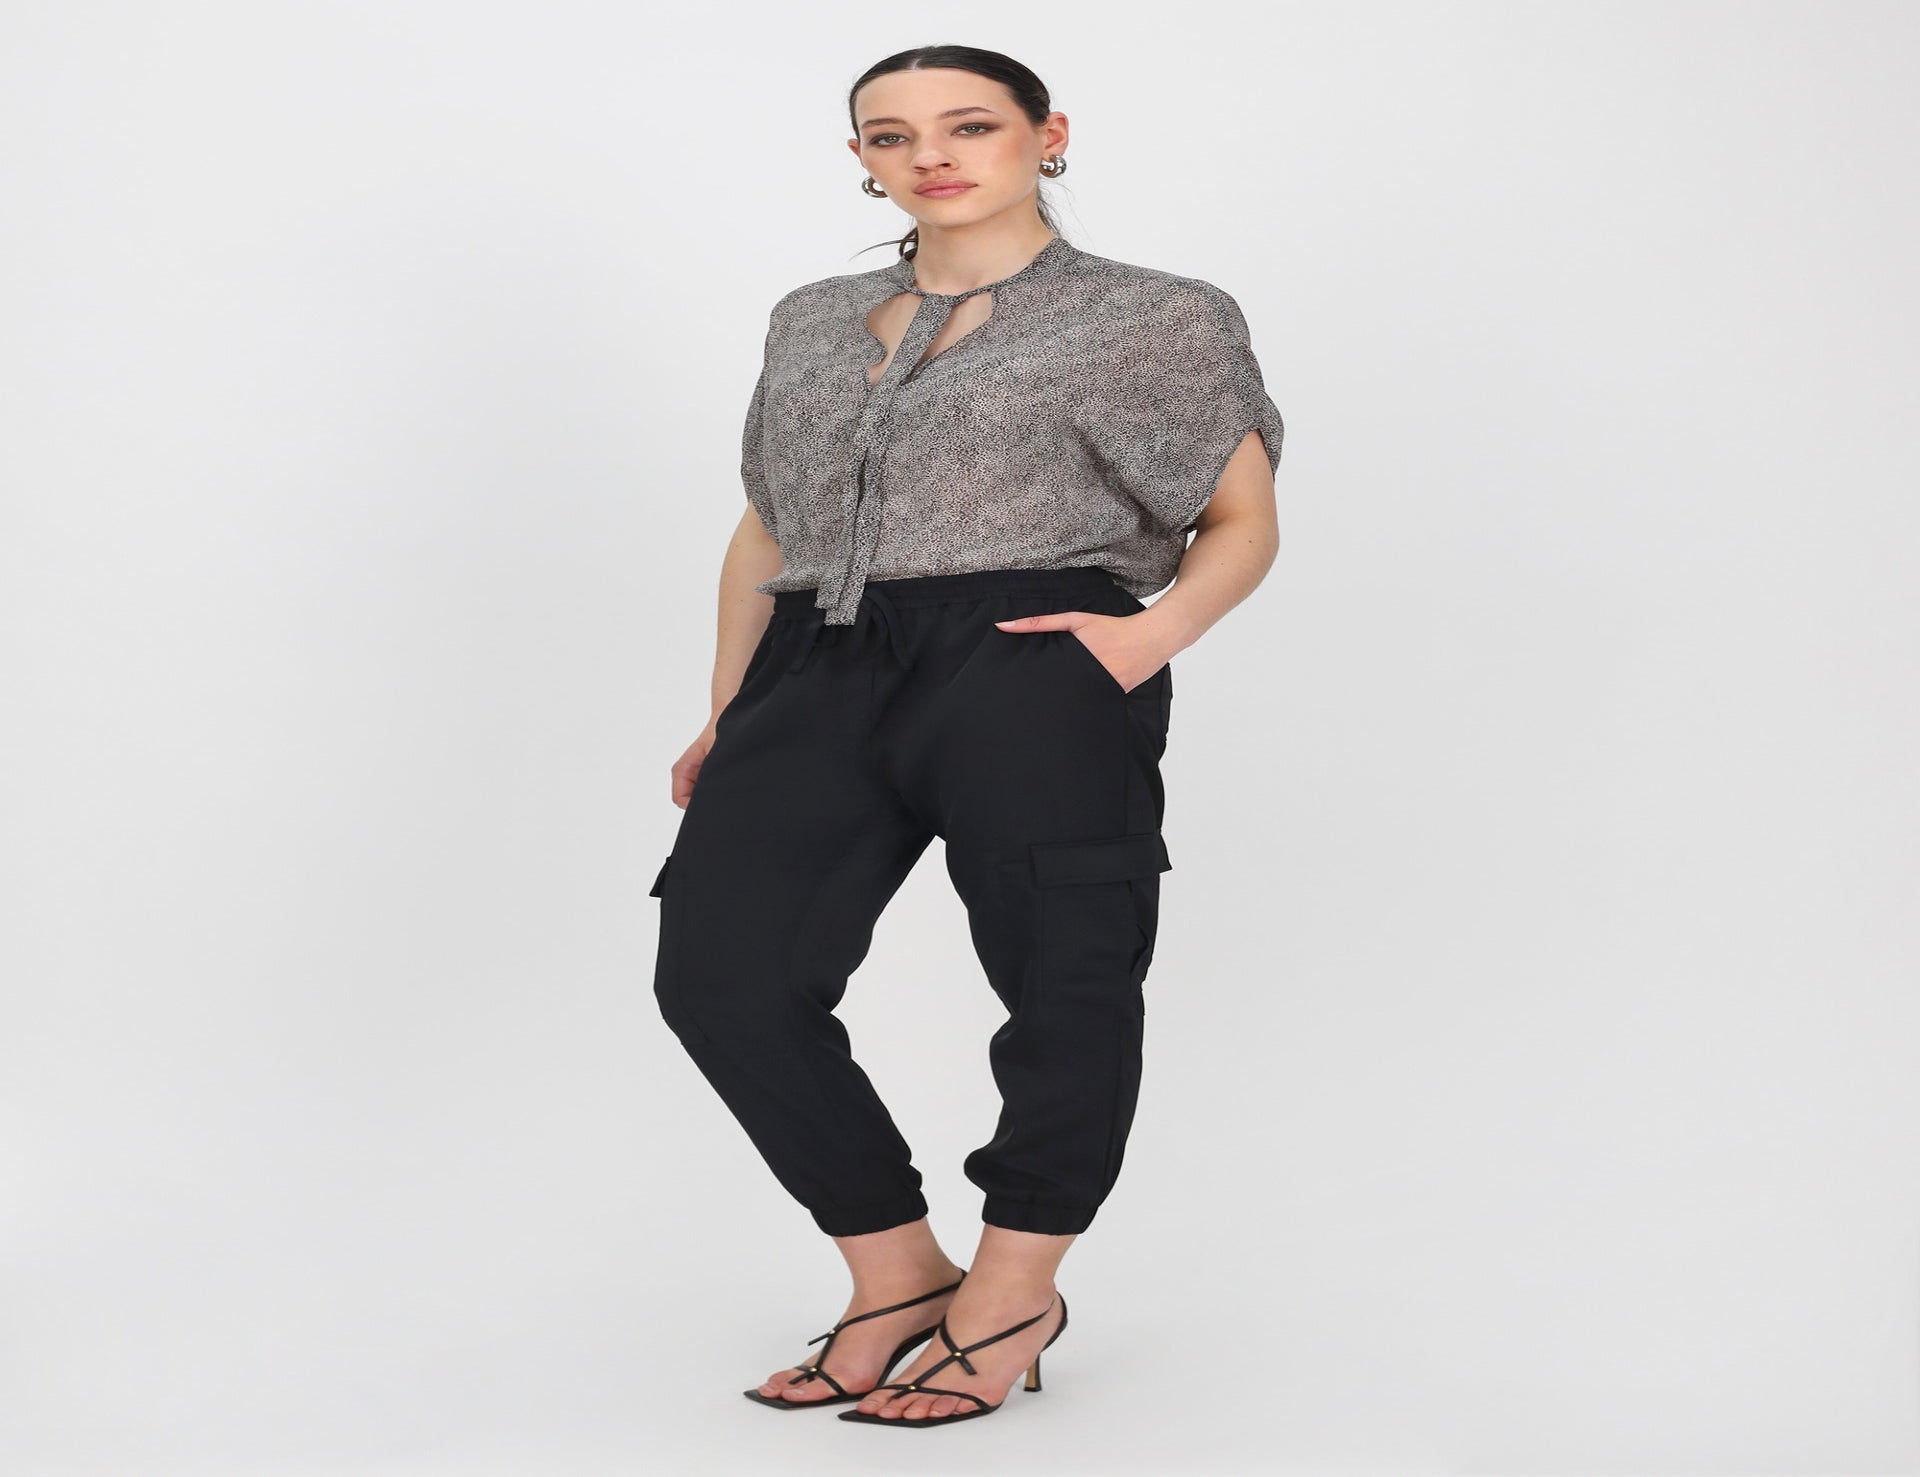 Twill Cargo Pant - Black - Pants - Full Length - Women's Clothing - Storm